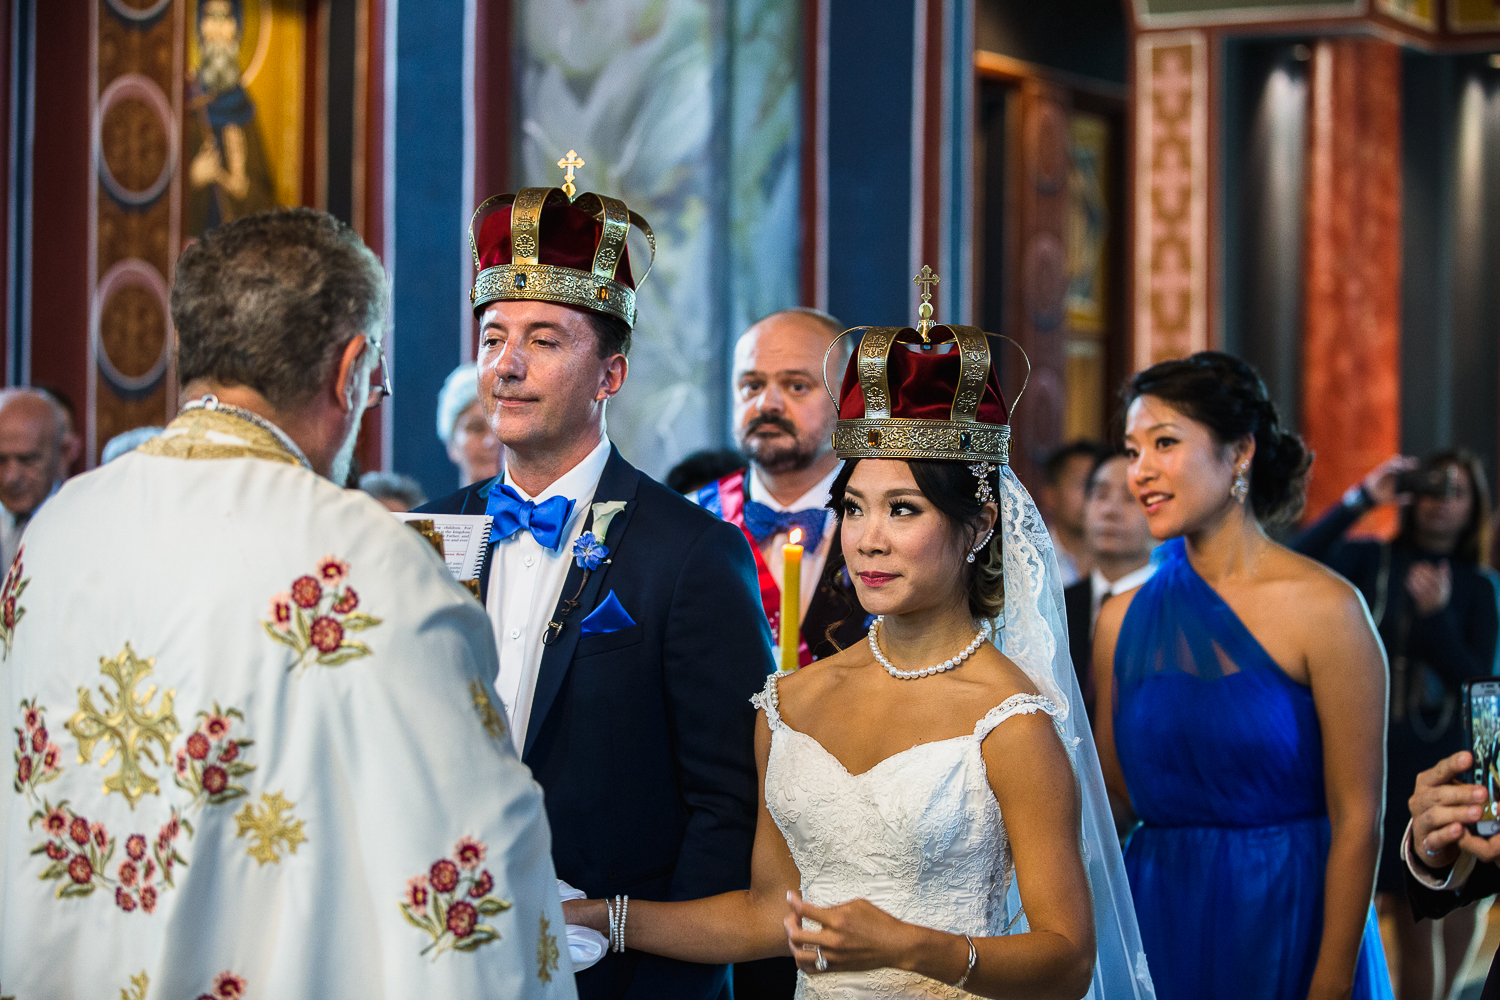 St-Sava-Serbian-Orthodox-Church-Wedding-Mississauga-Ontario-Derrel-Ho-Shing-Photography-0015.jpg